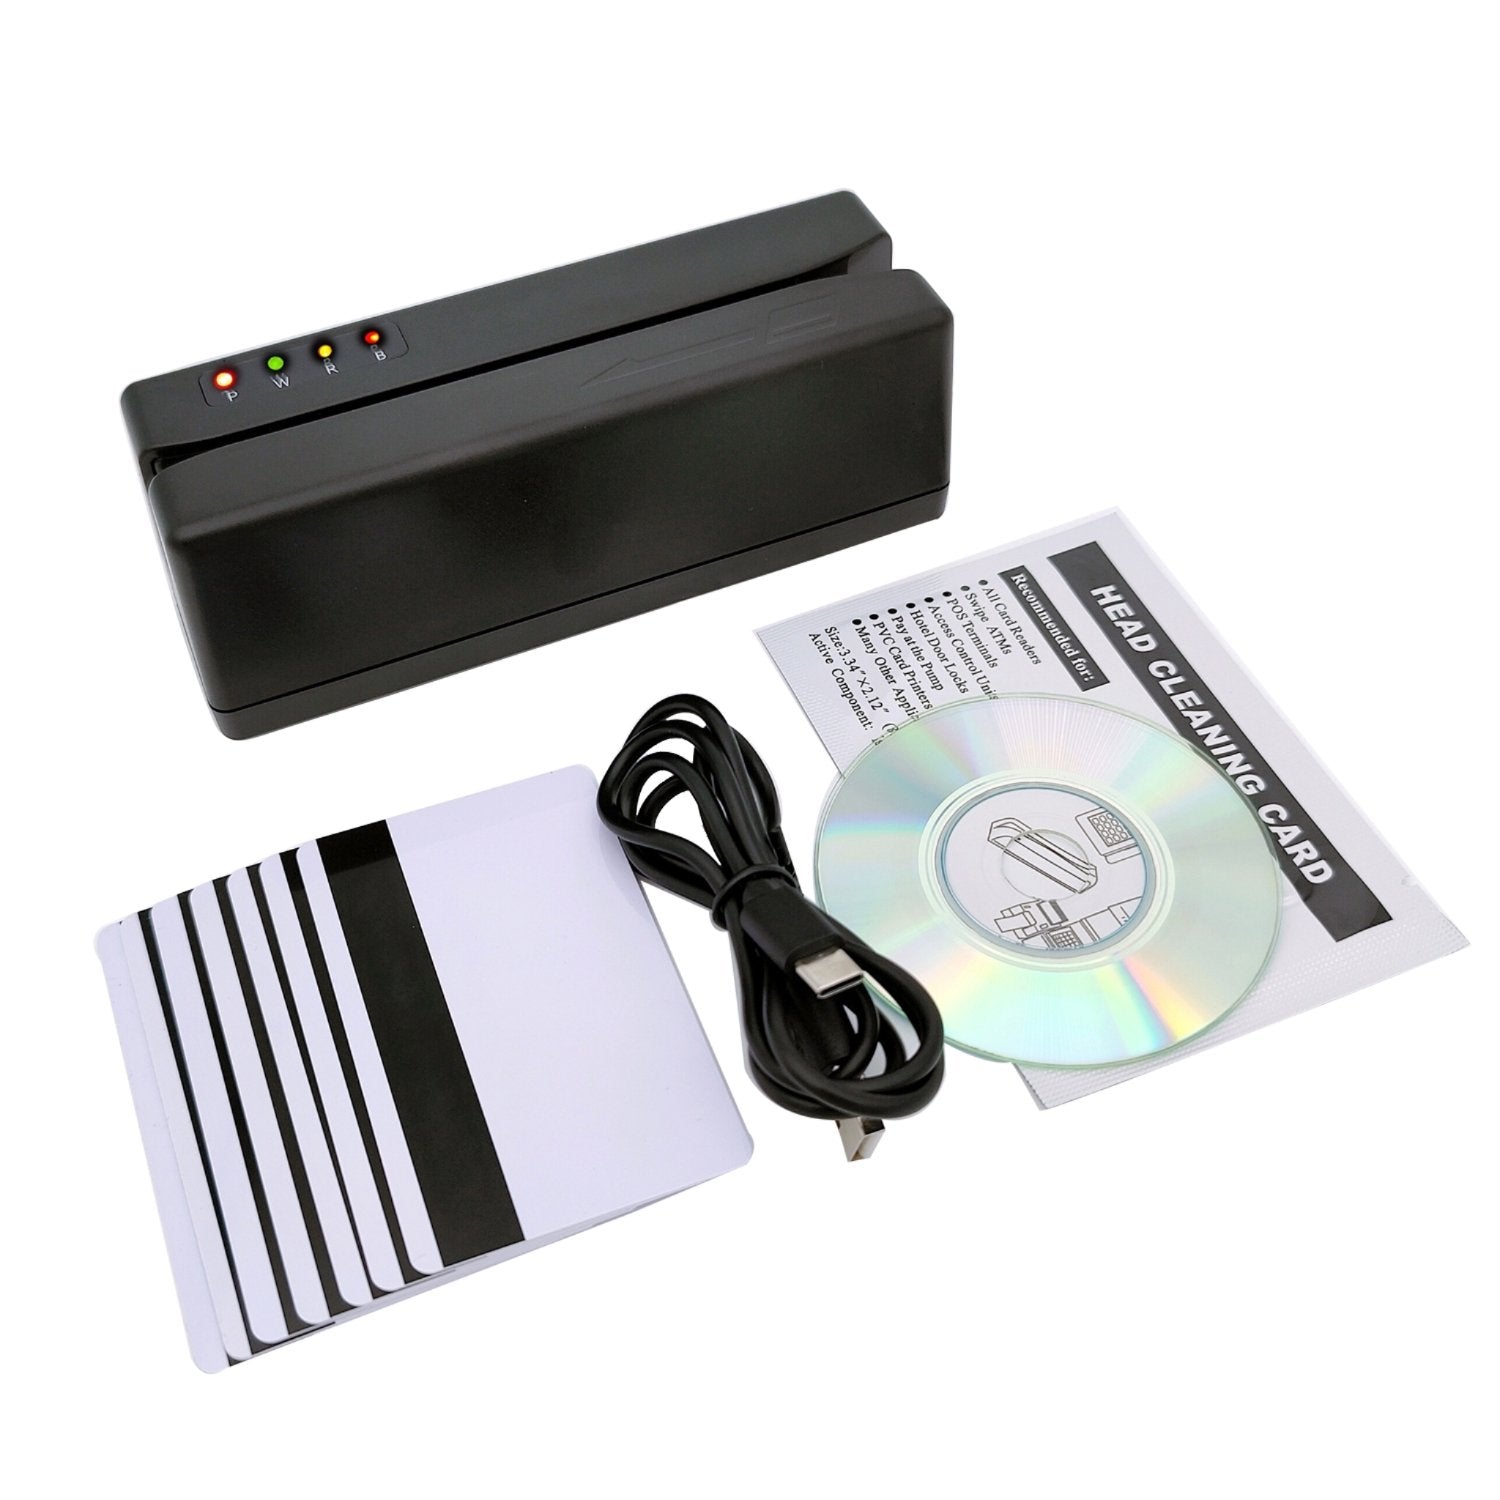 MSR605 Magnetic Card Reader Writer Encoder Stripe Swipe Credit